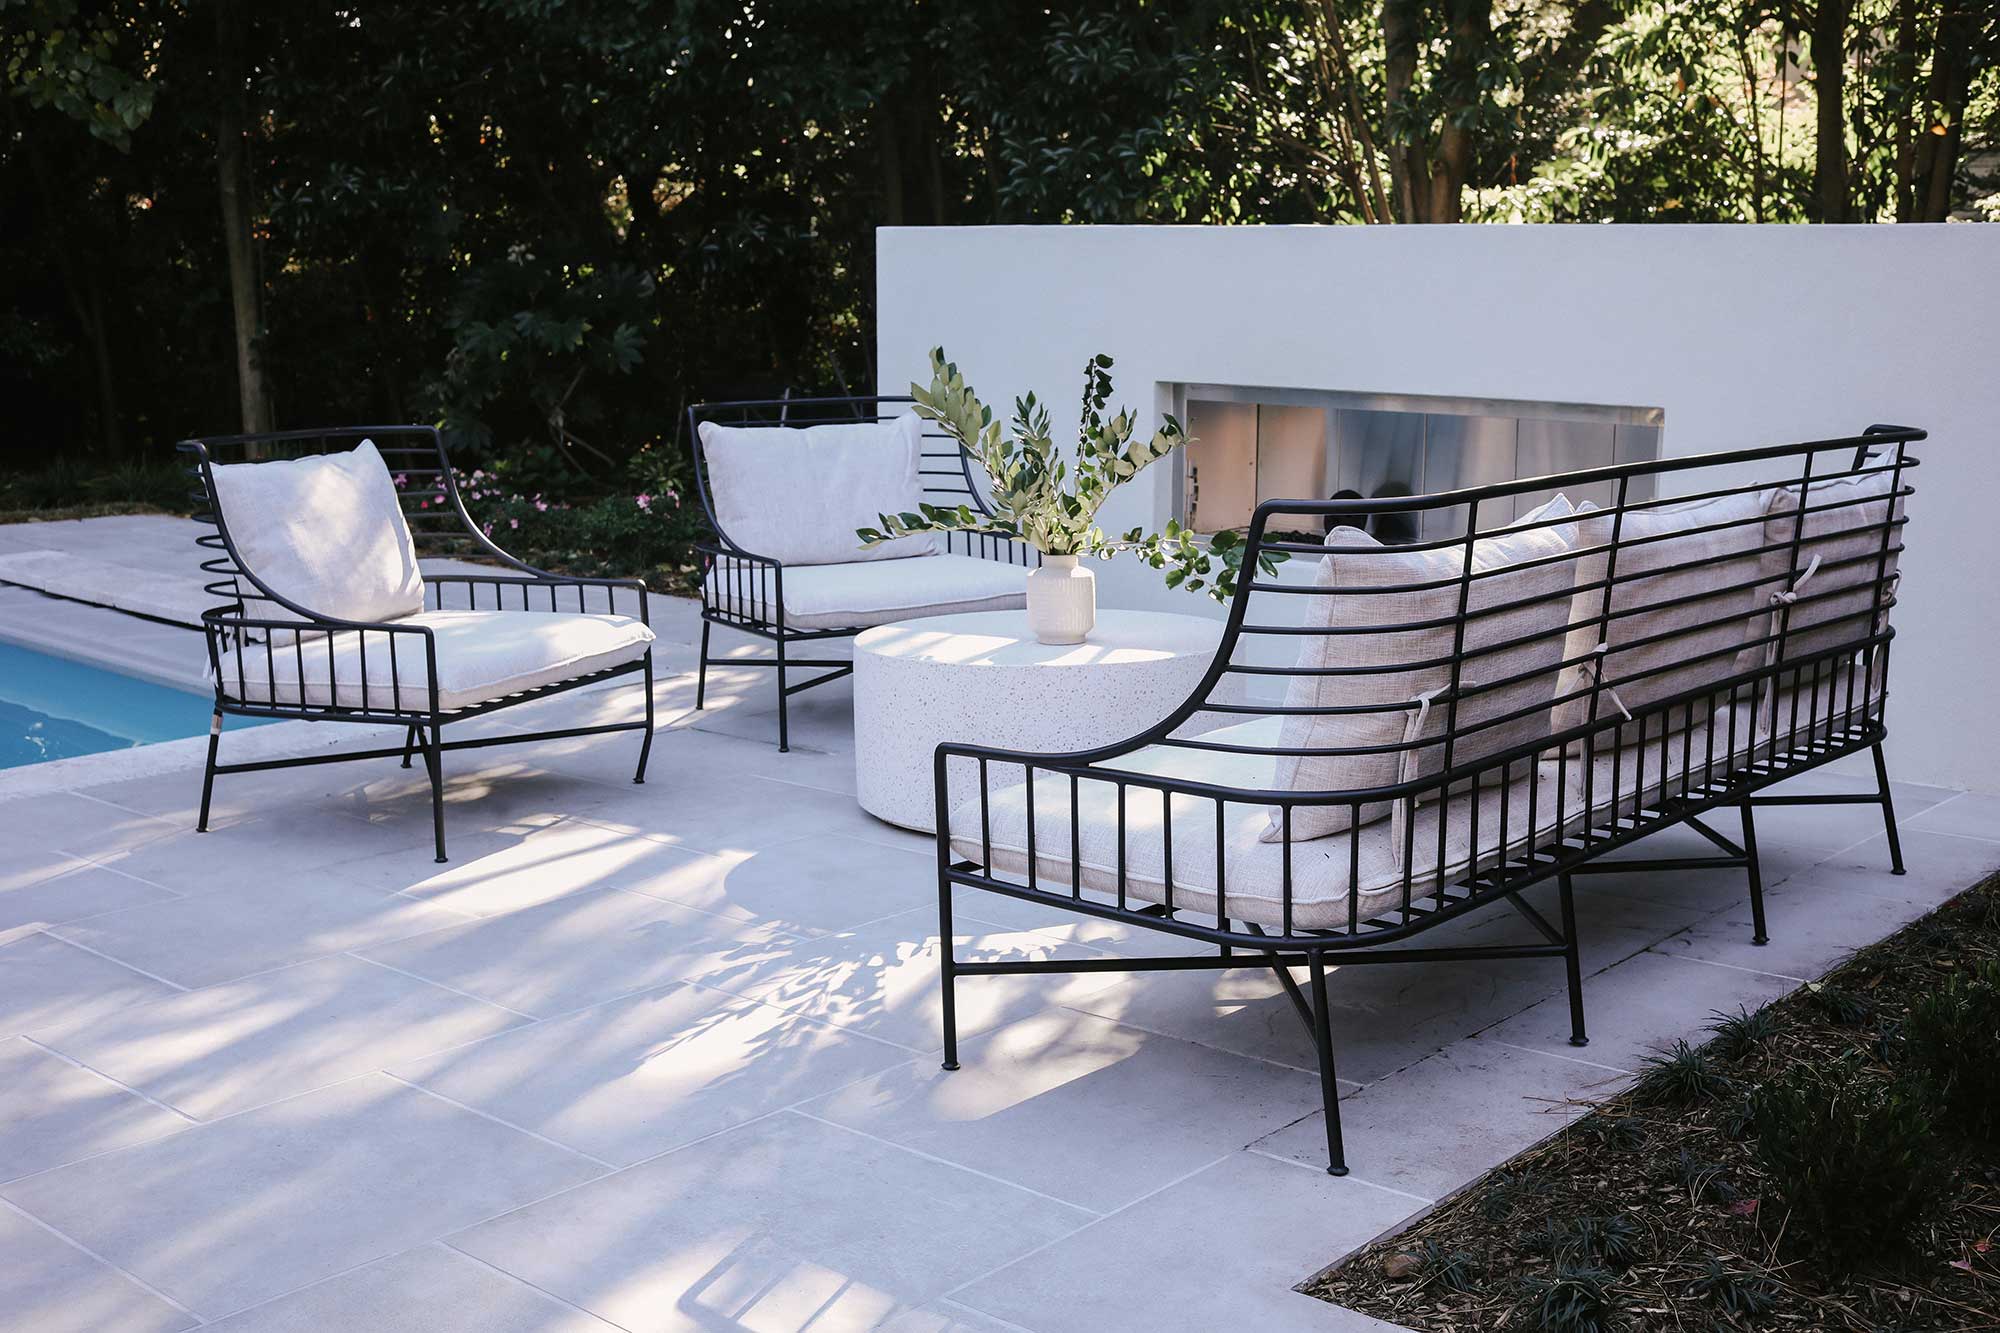 pool design by interior designer Patchi Cancado